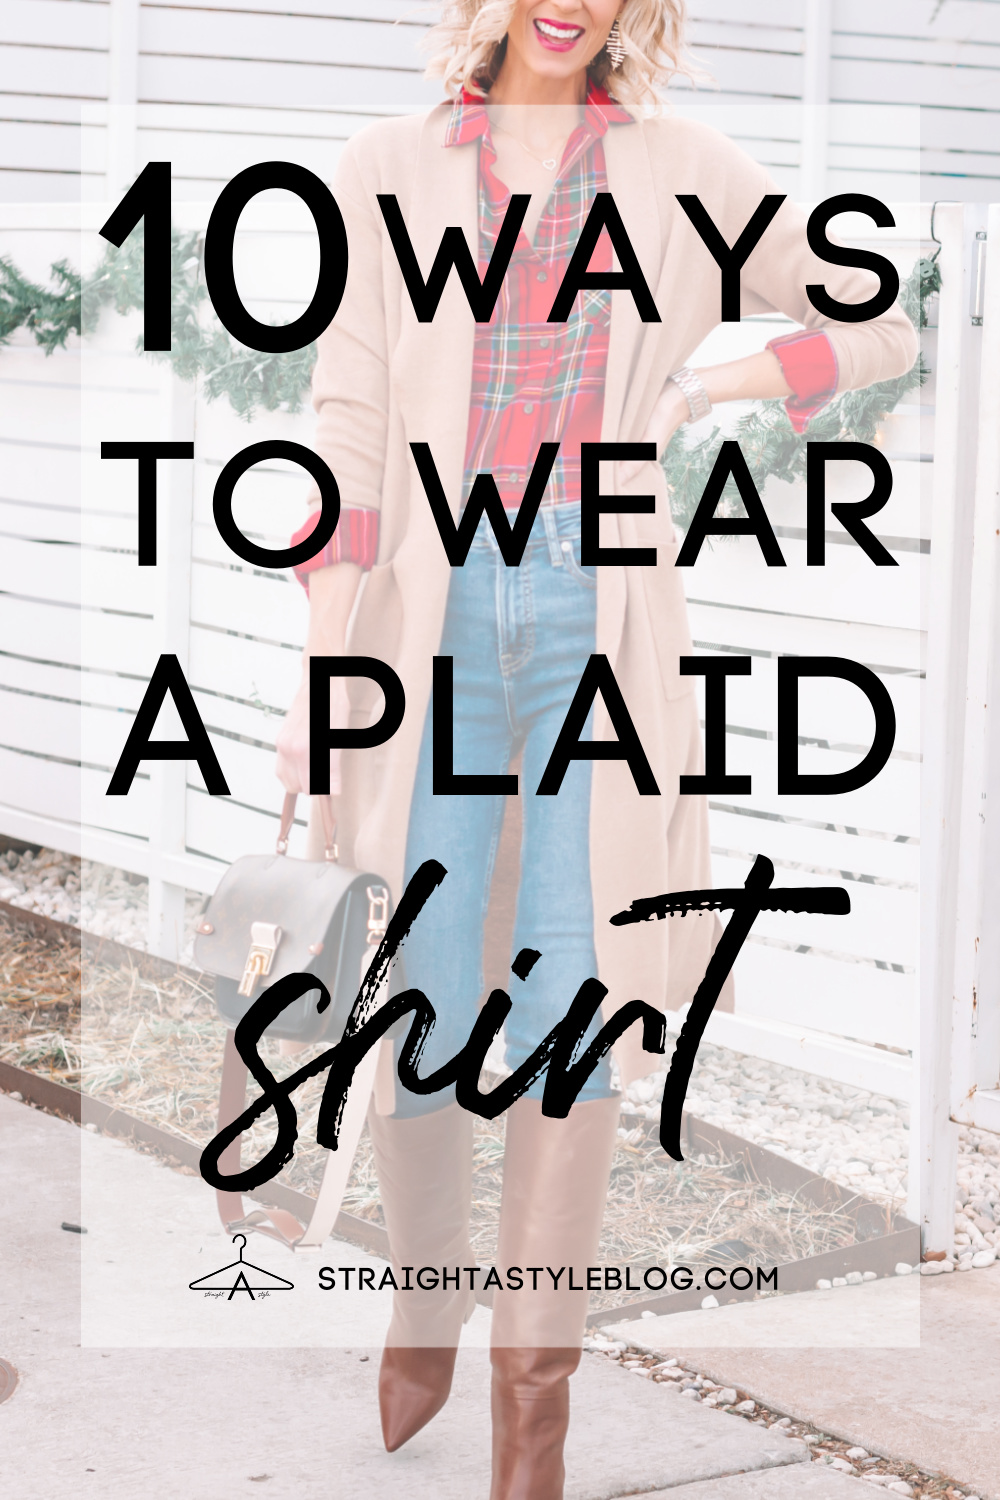 10 Ways To Wear a Plaid Shirt - Classy Yet Trendy